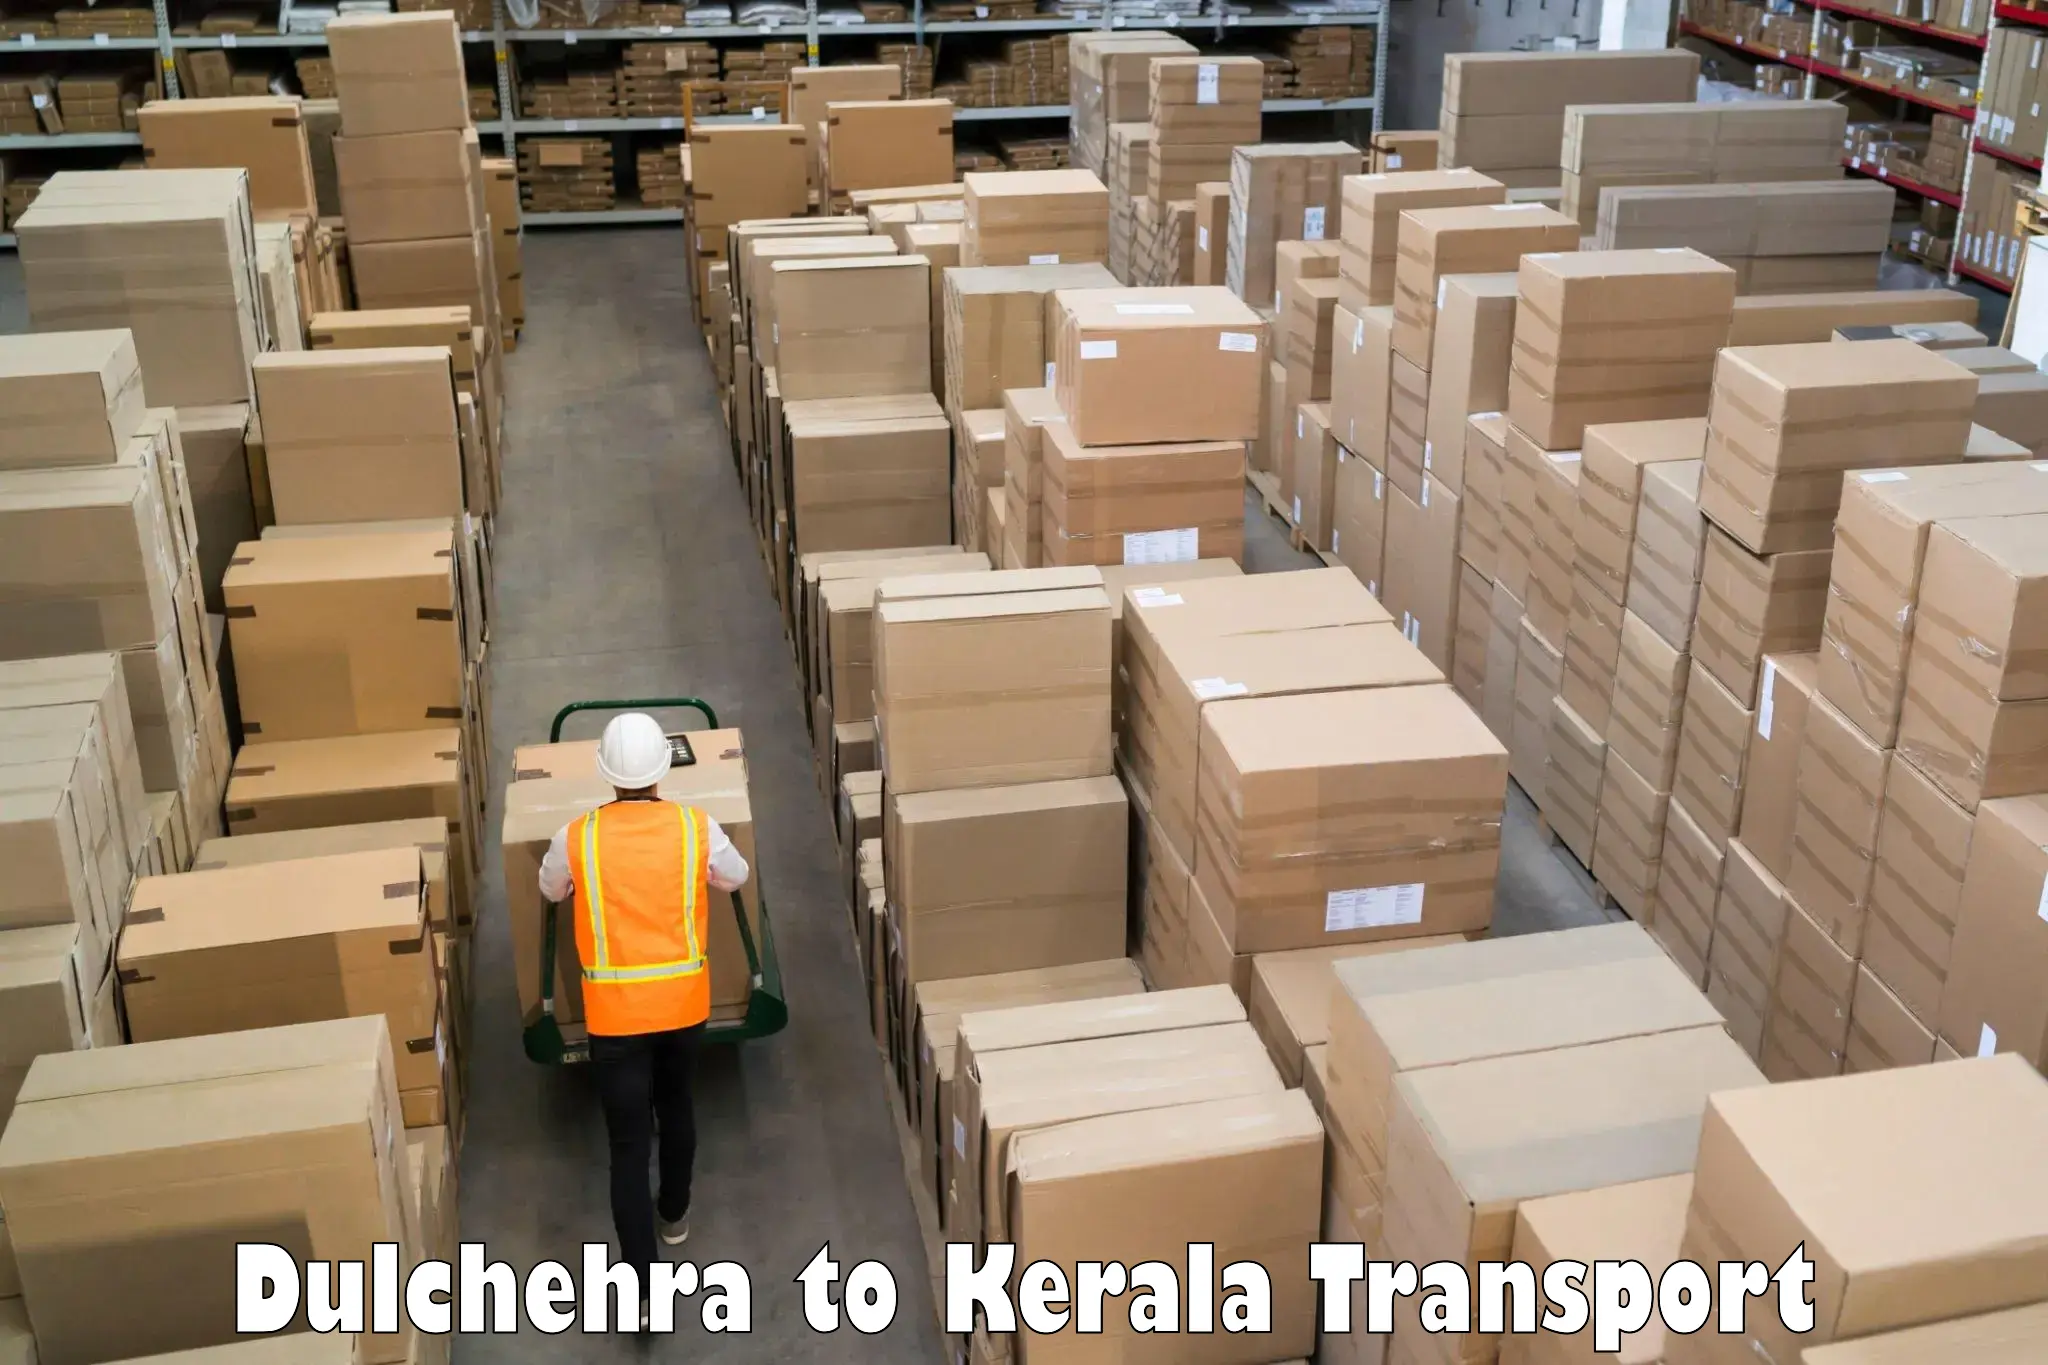 Nearby transport service Dulchehra to Malappuram